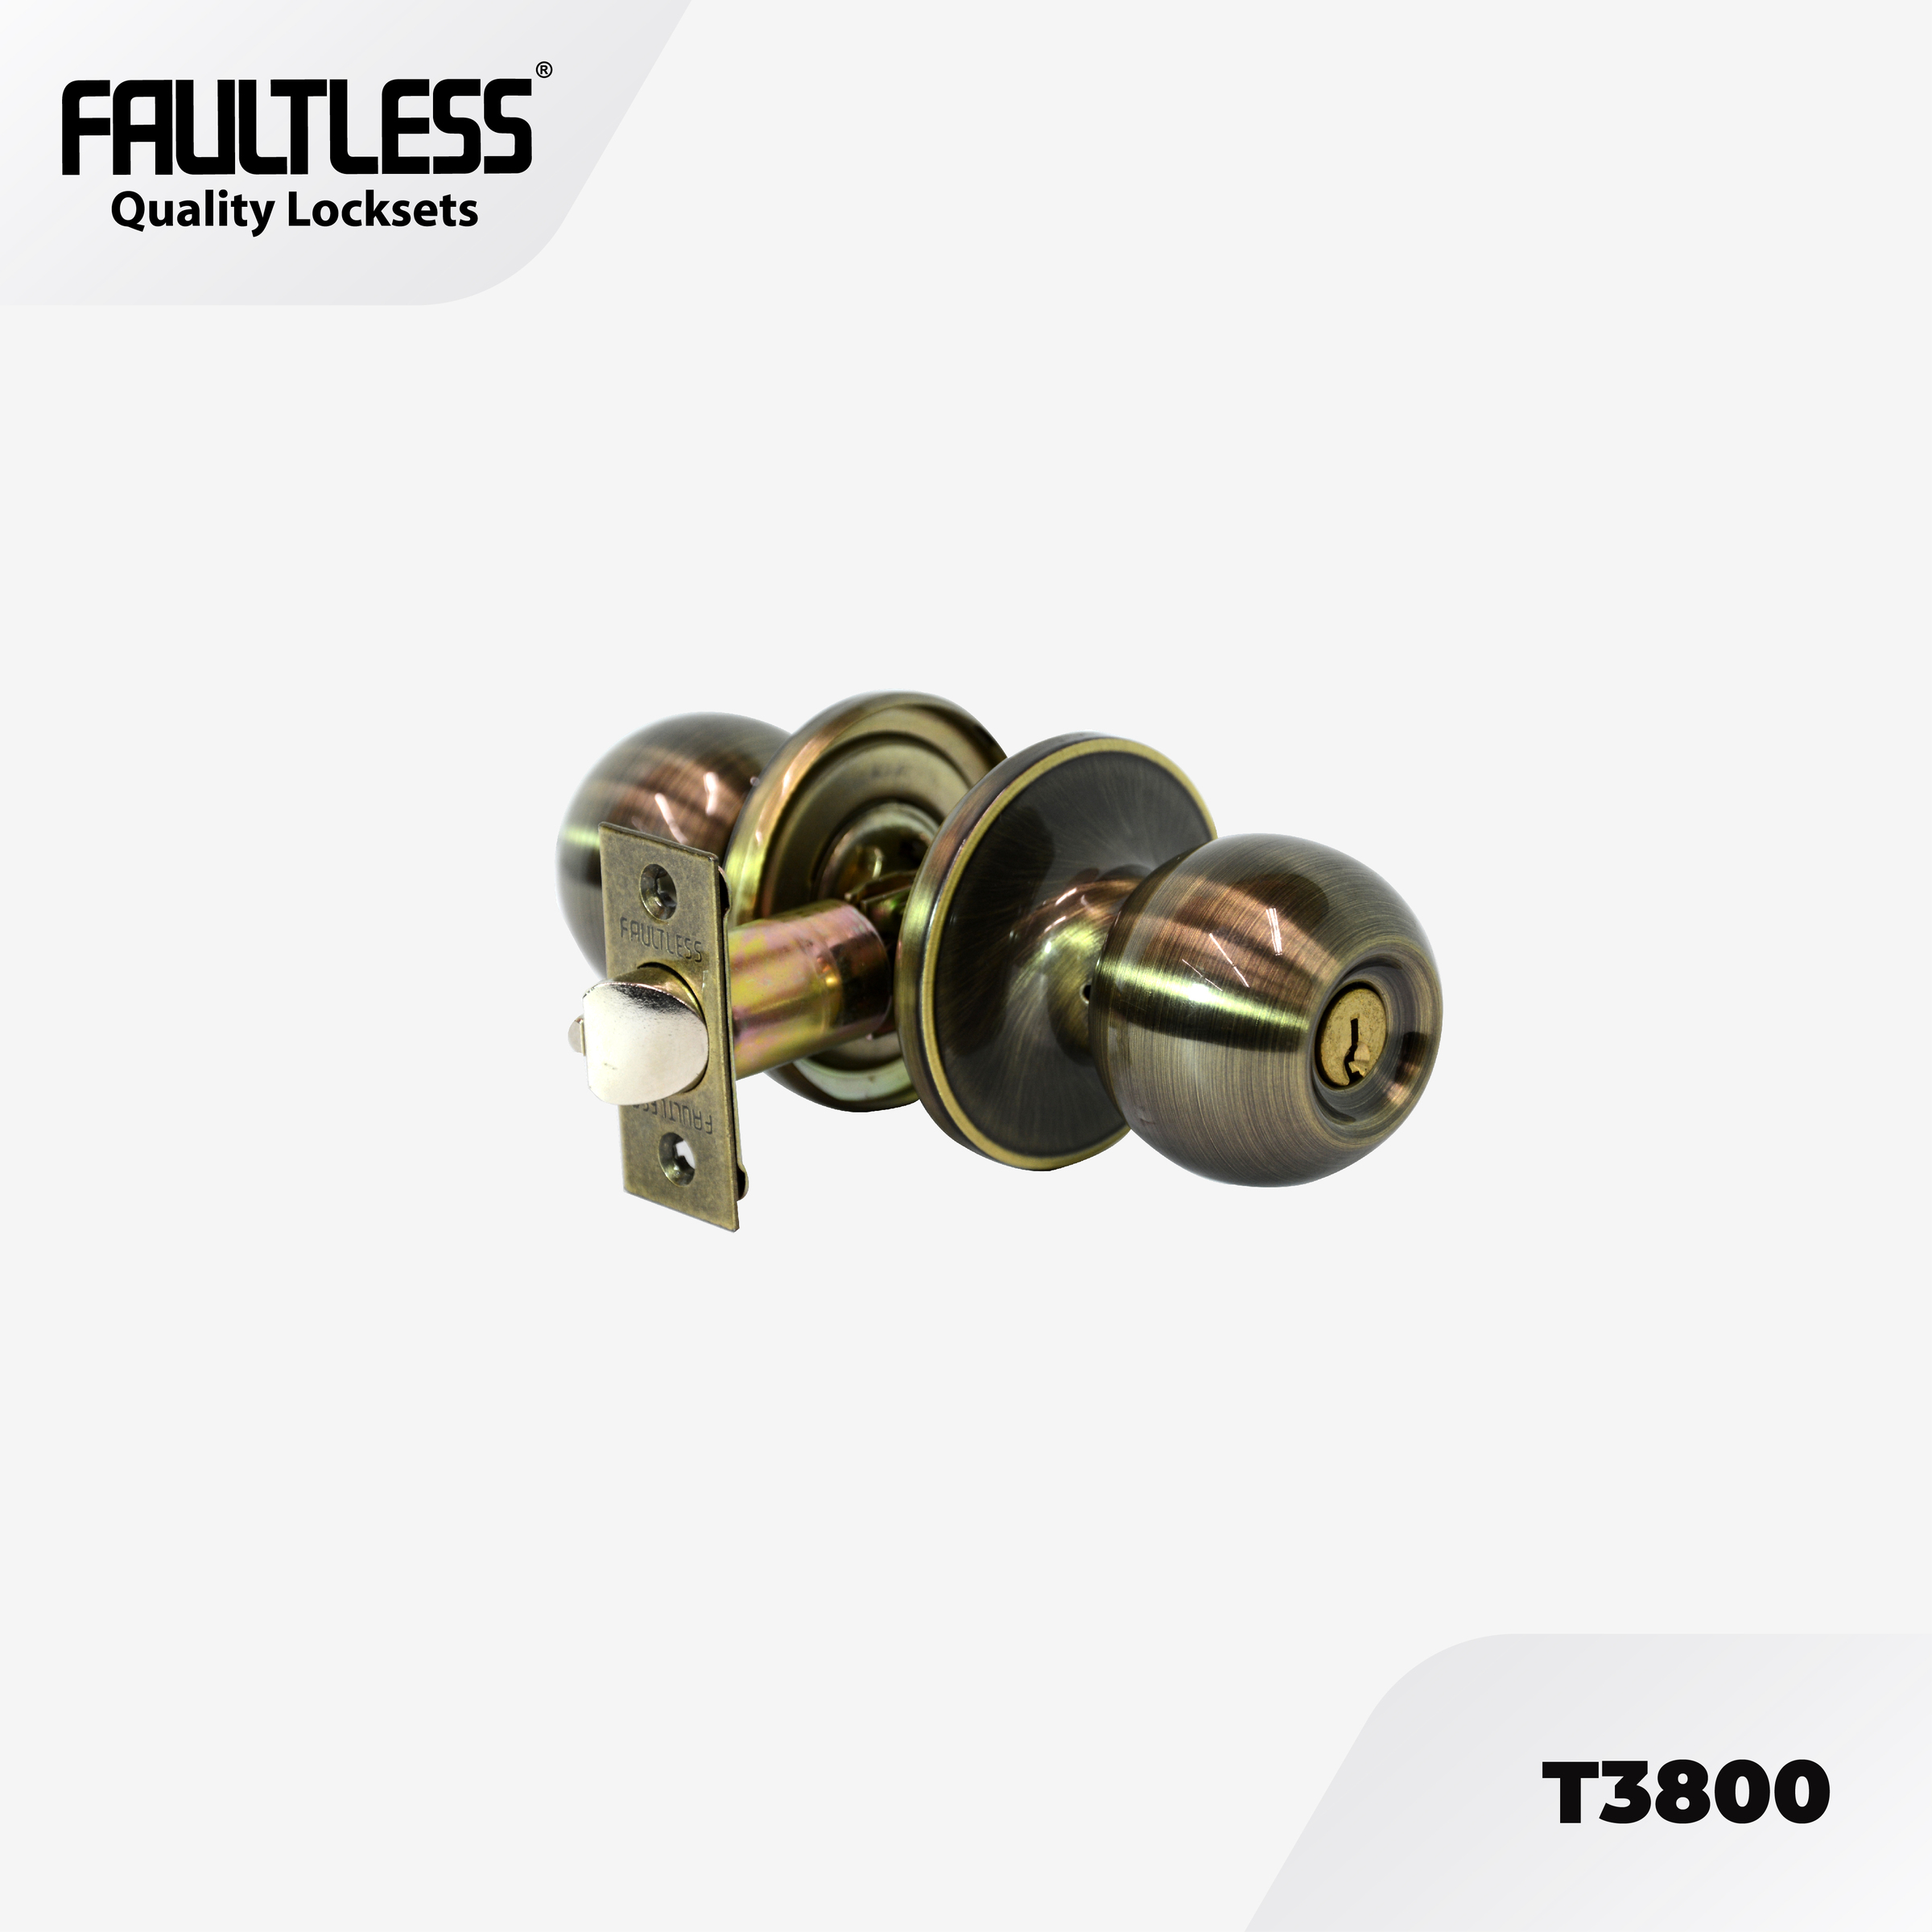 Faultless Knobset T3800